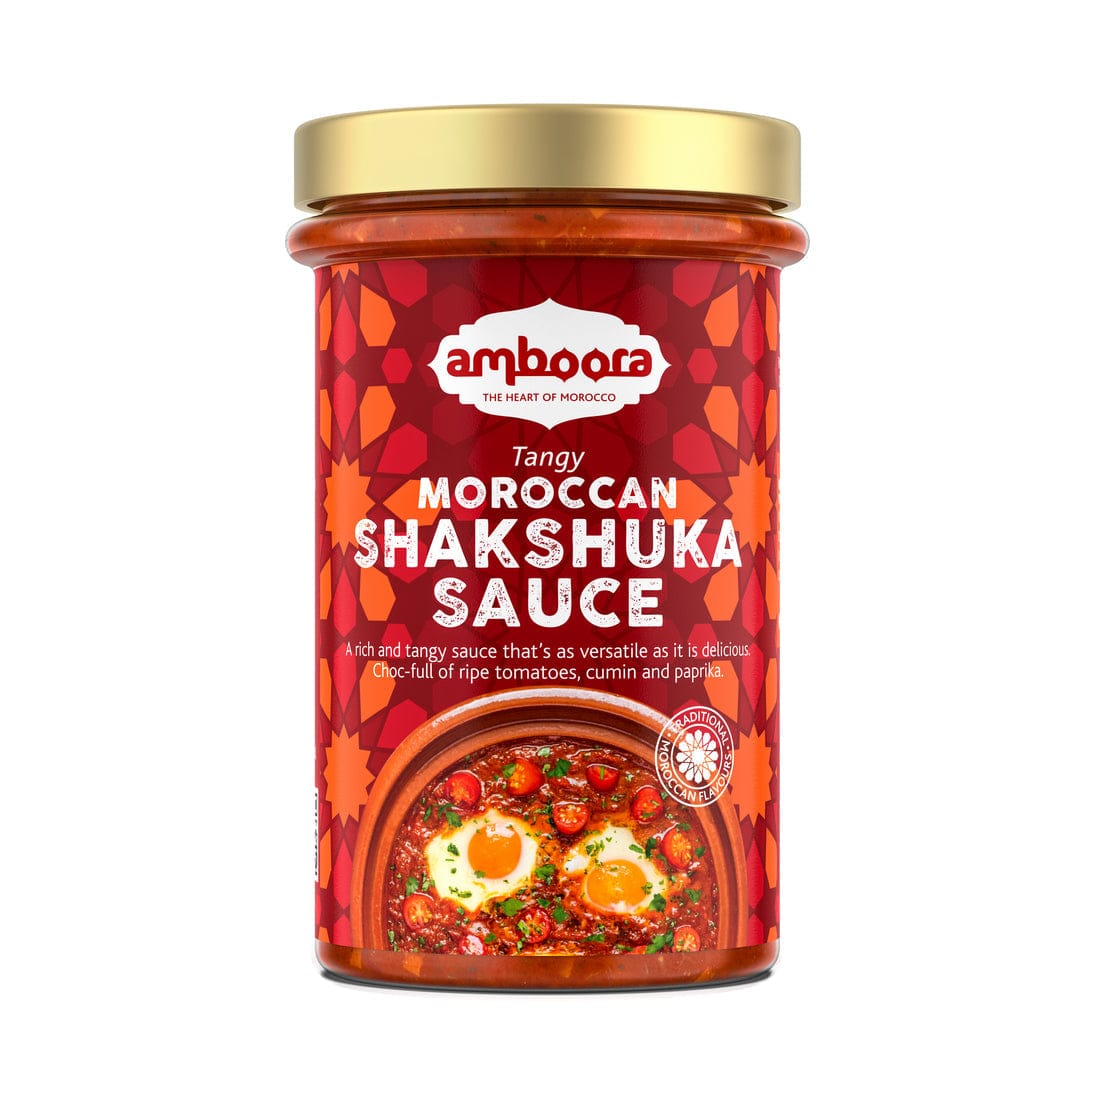 Amboora Tangy Moroccan Shakshuka Sauce